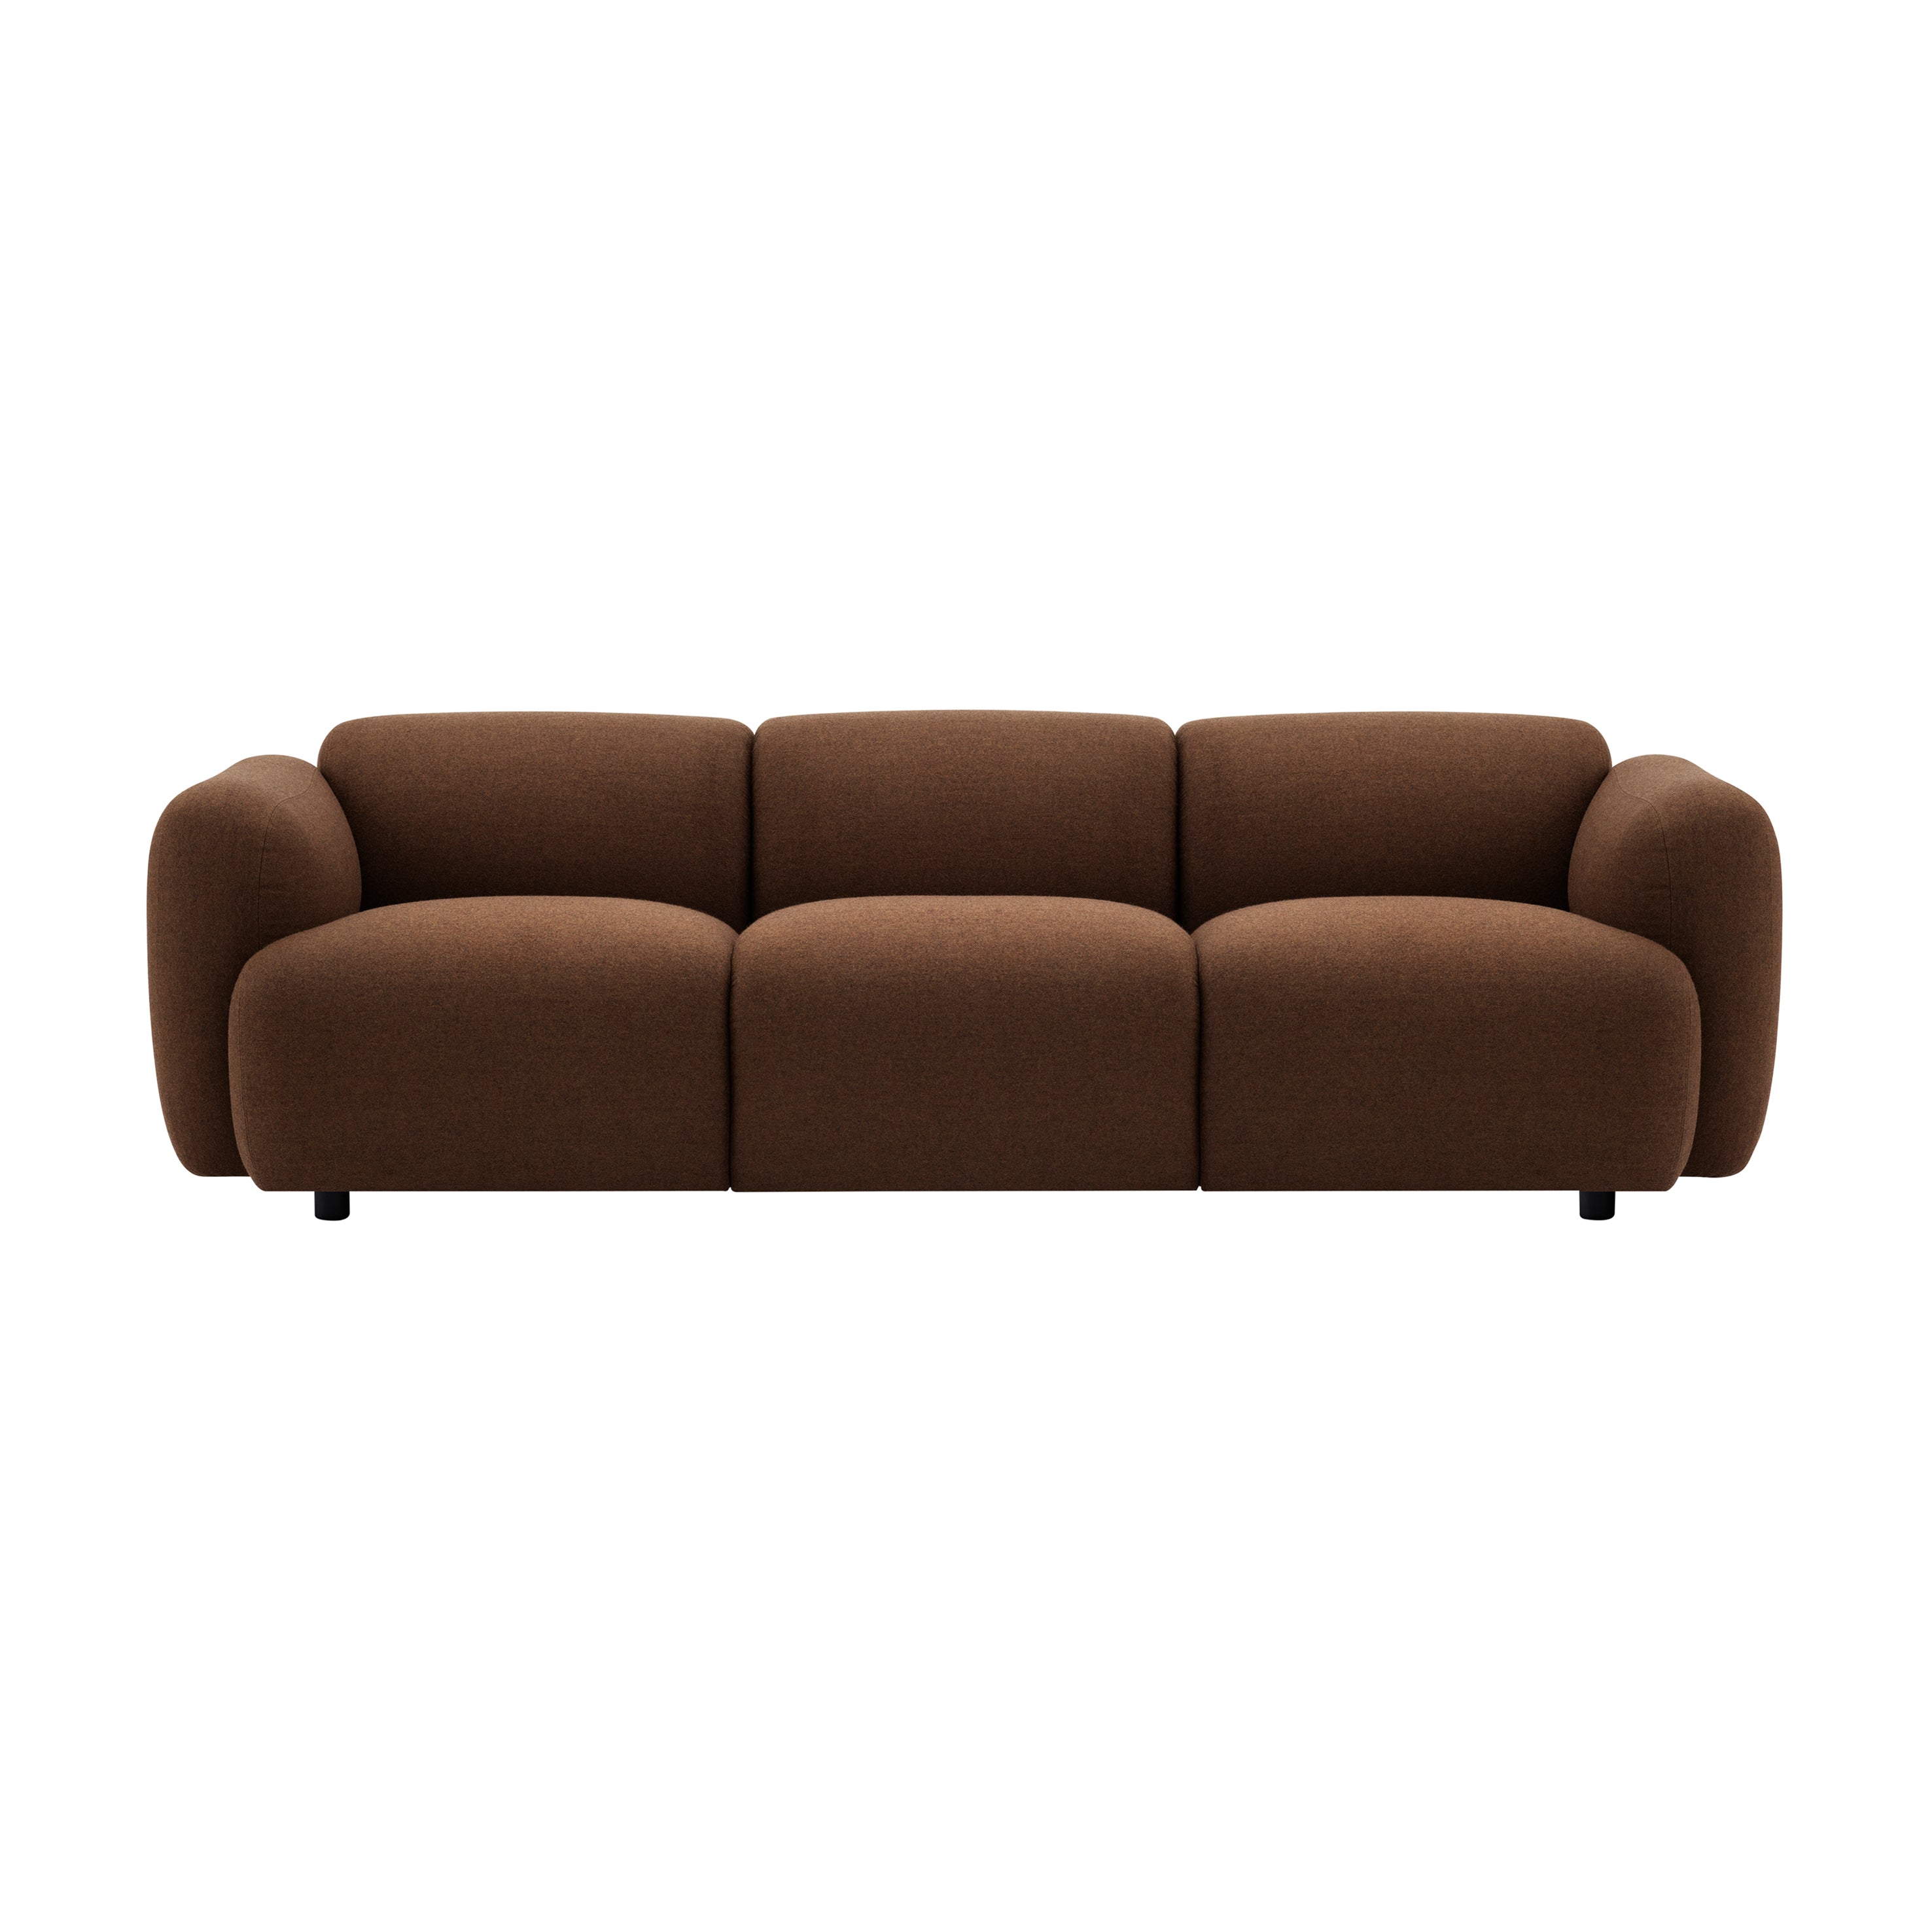 Swell Modular 2 Seater Sofa: Configuration 2